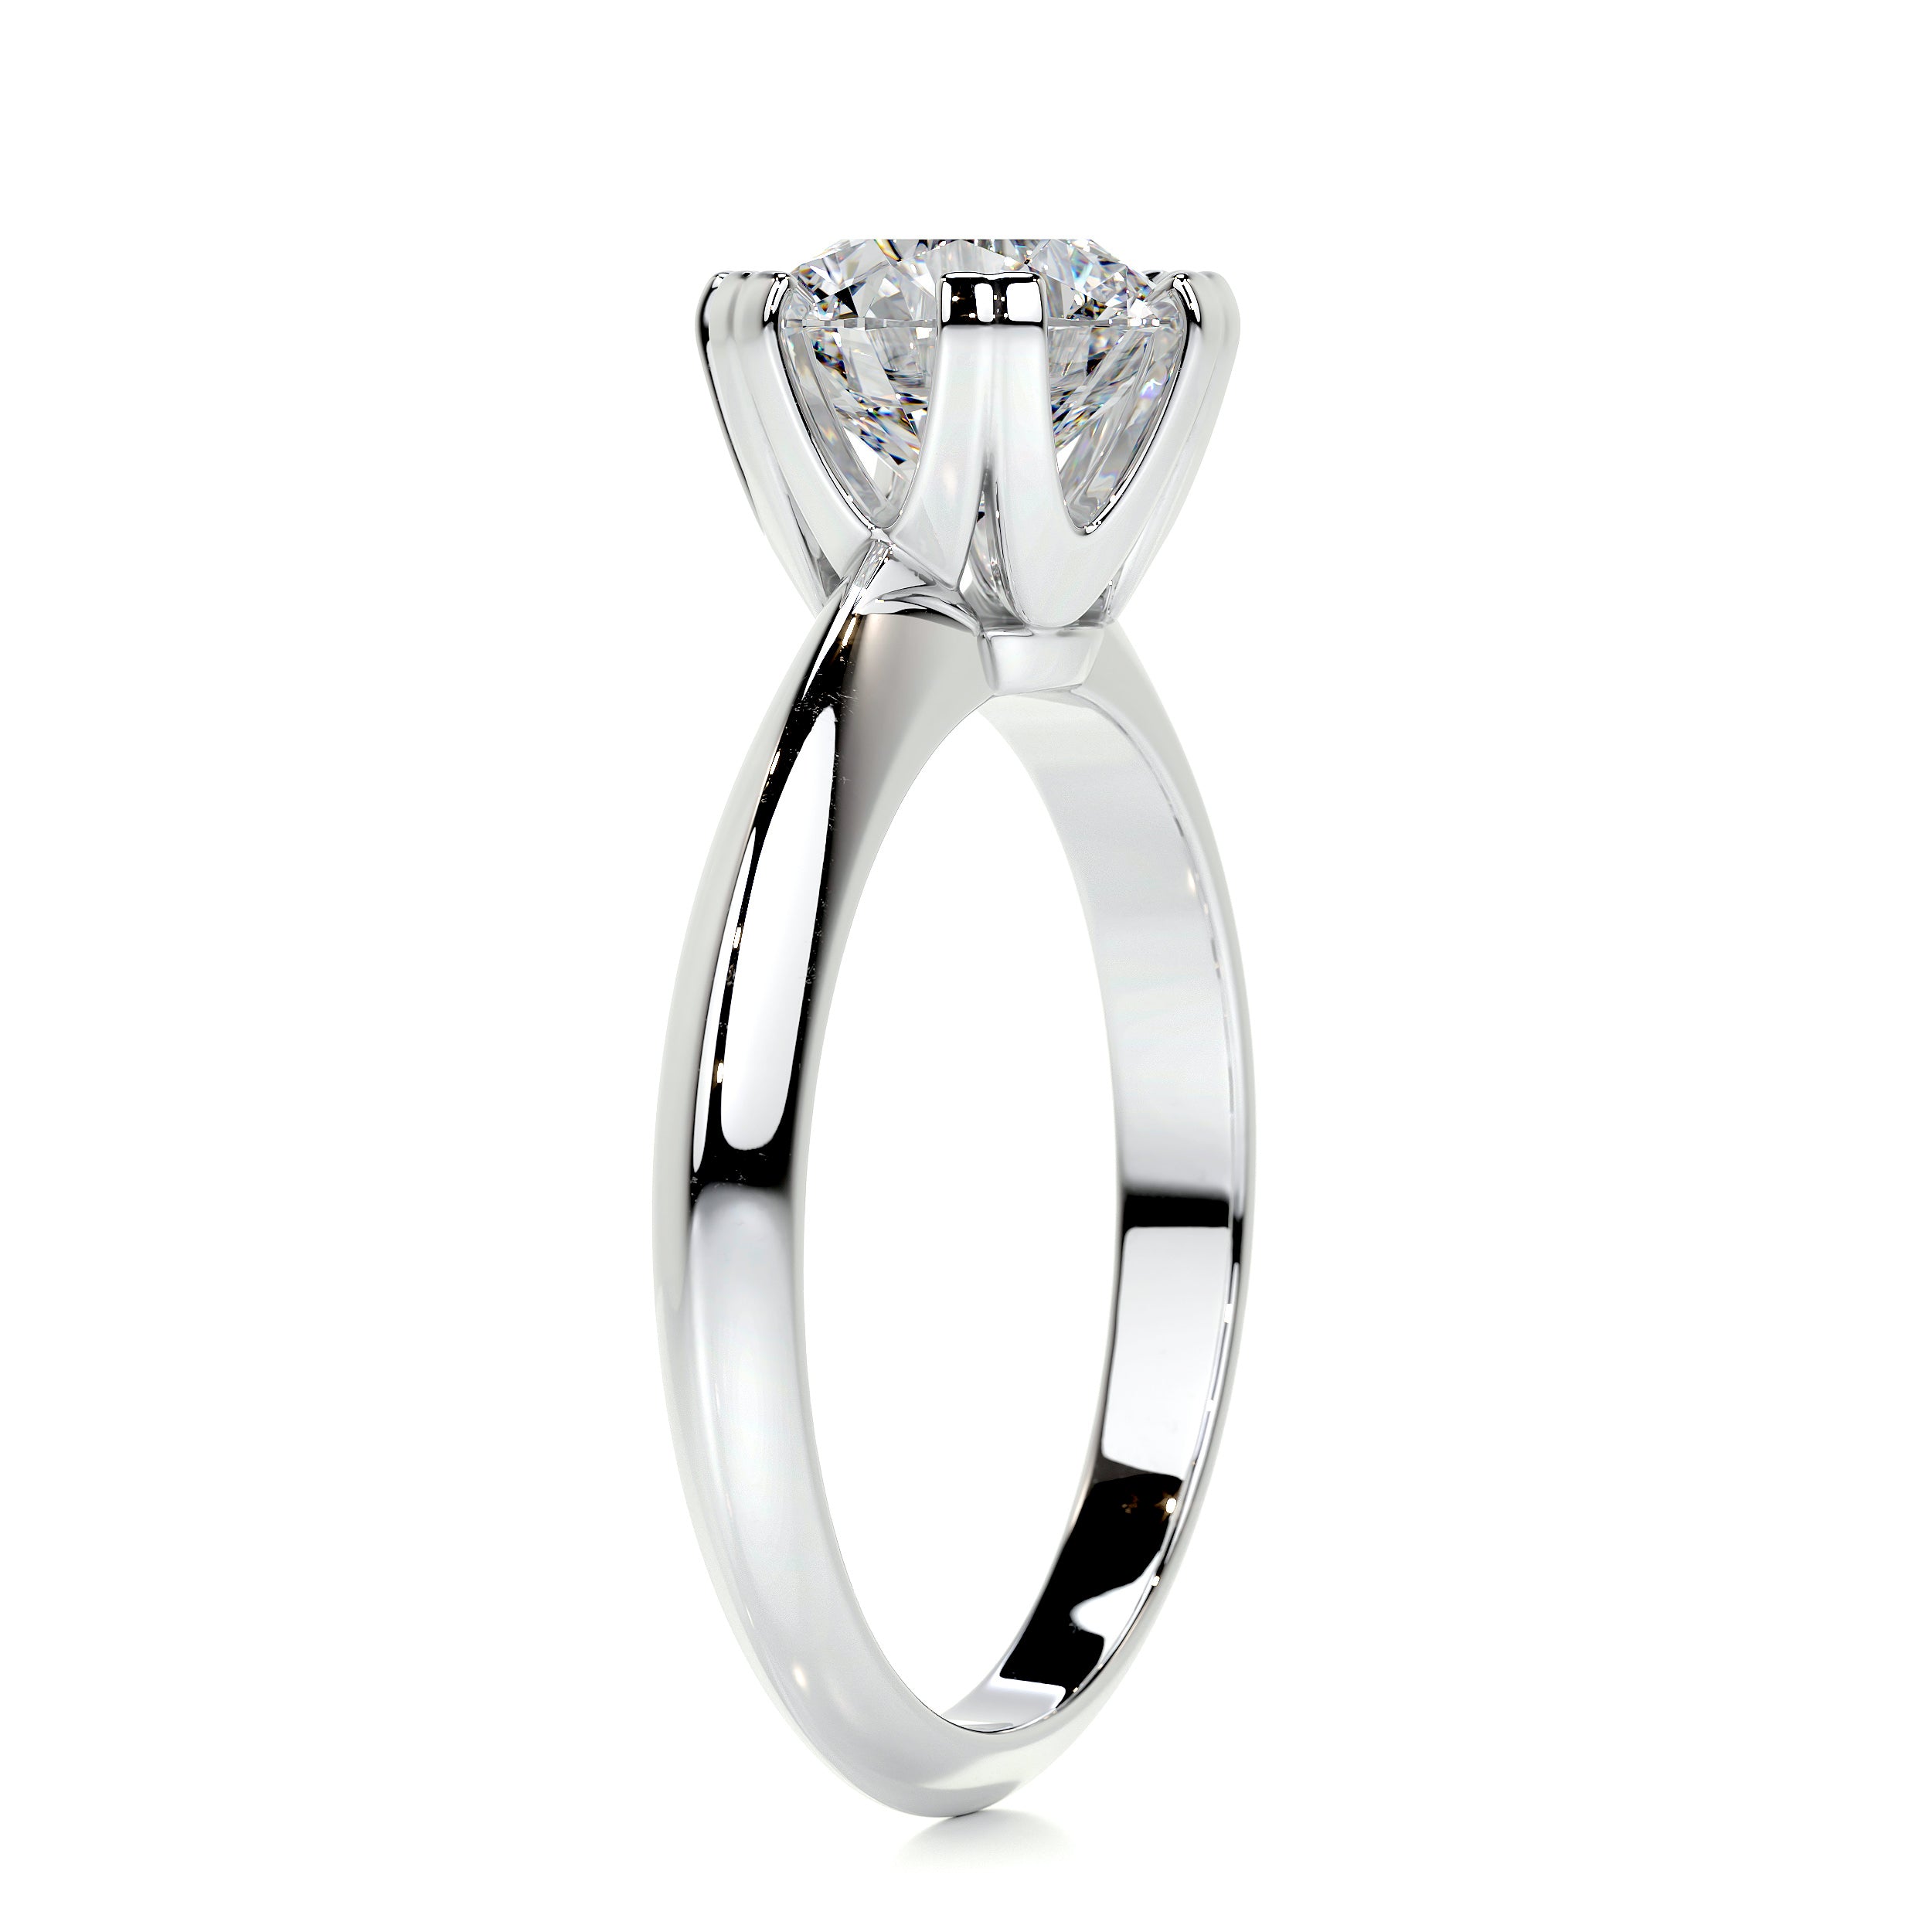 Alexis Diamond Engagement Ring   (1.5 Carat) -14K White Gold